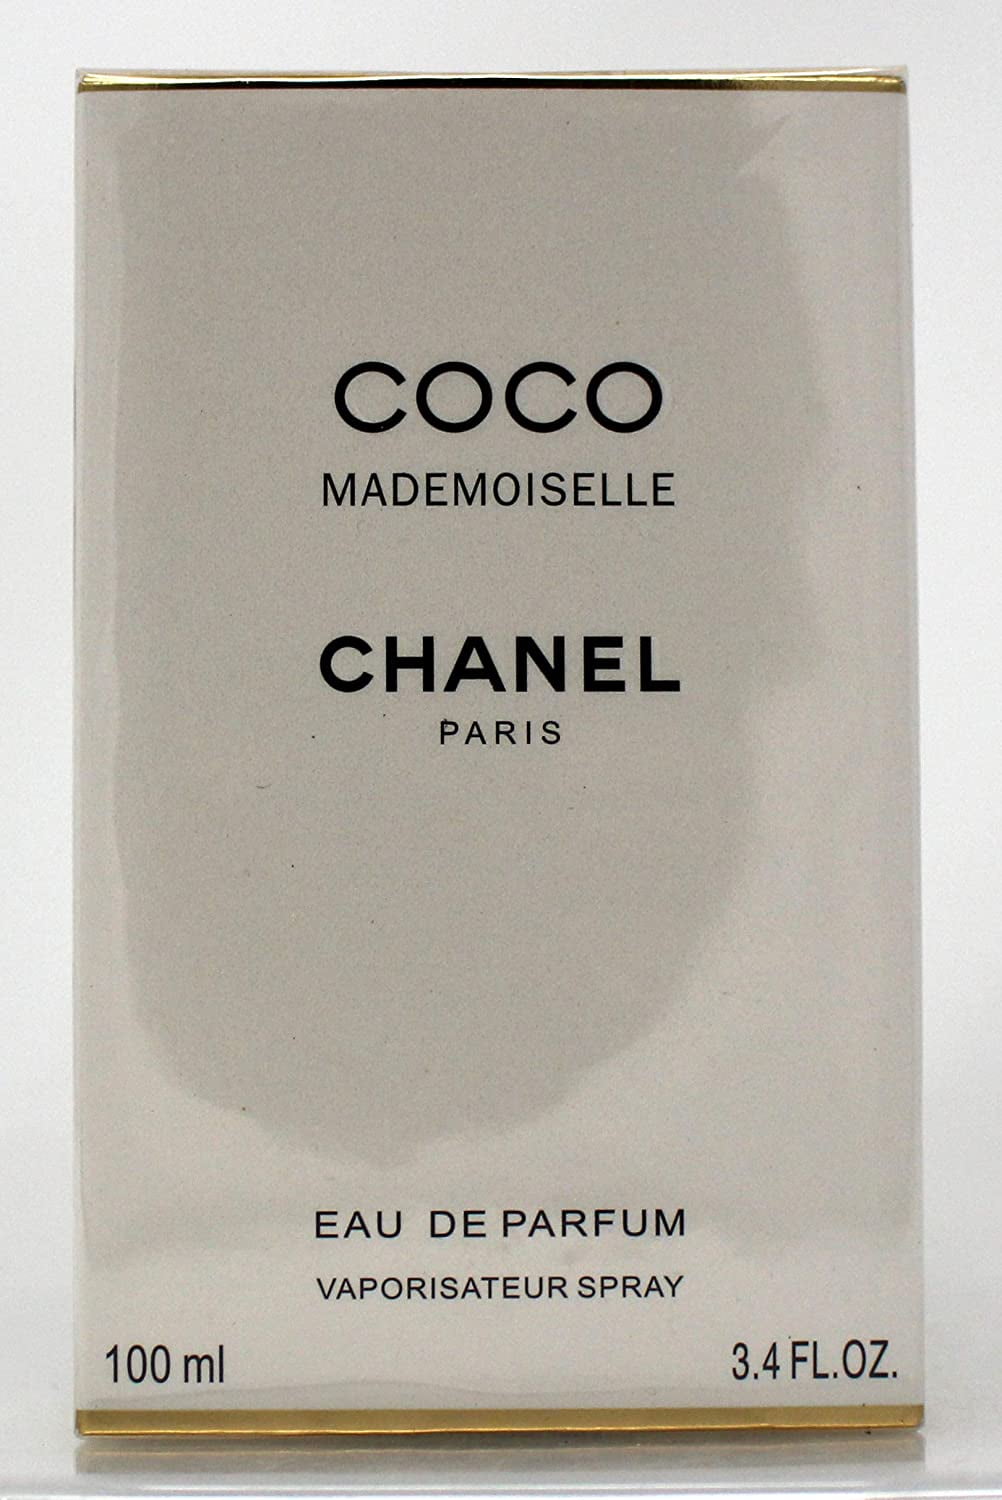 3.4 oz coco chanel mademoiselle